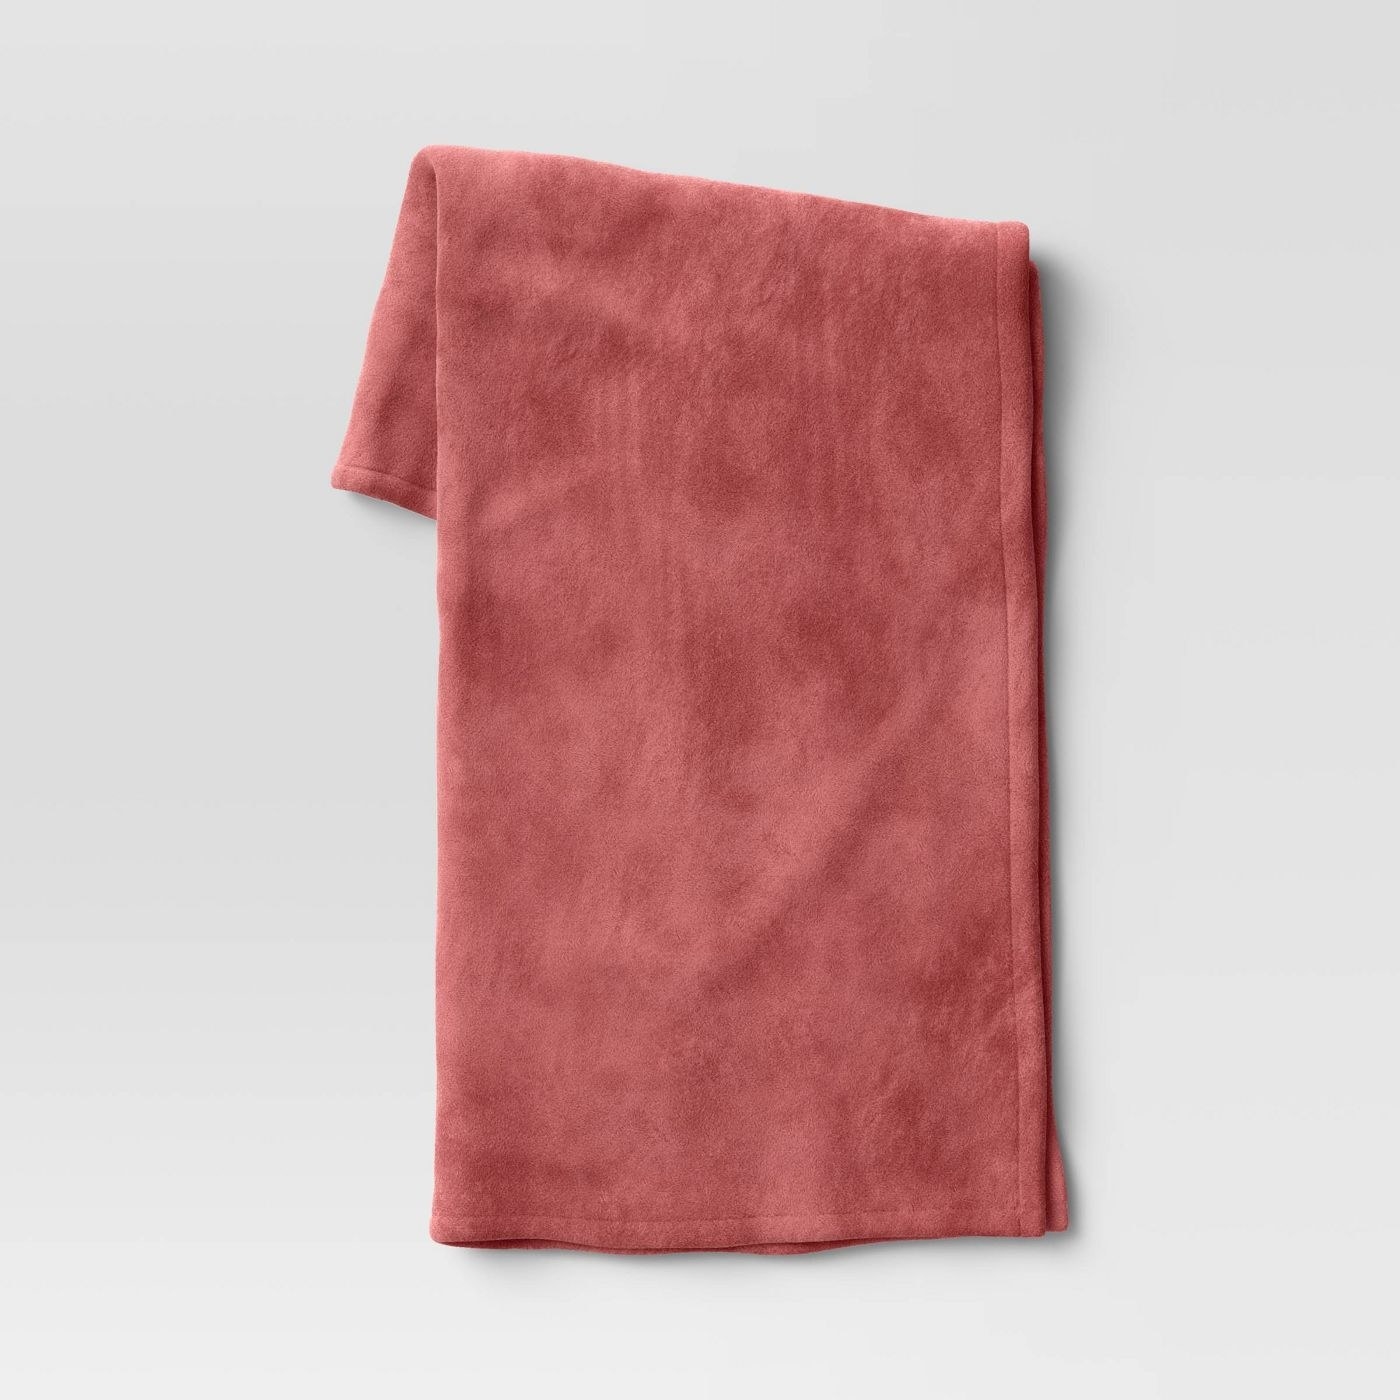 a pink blanket